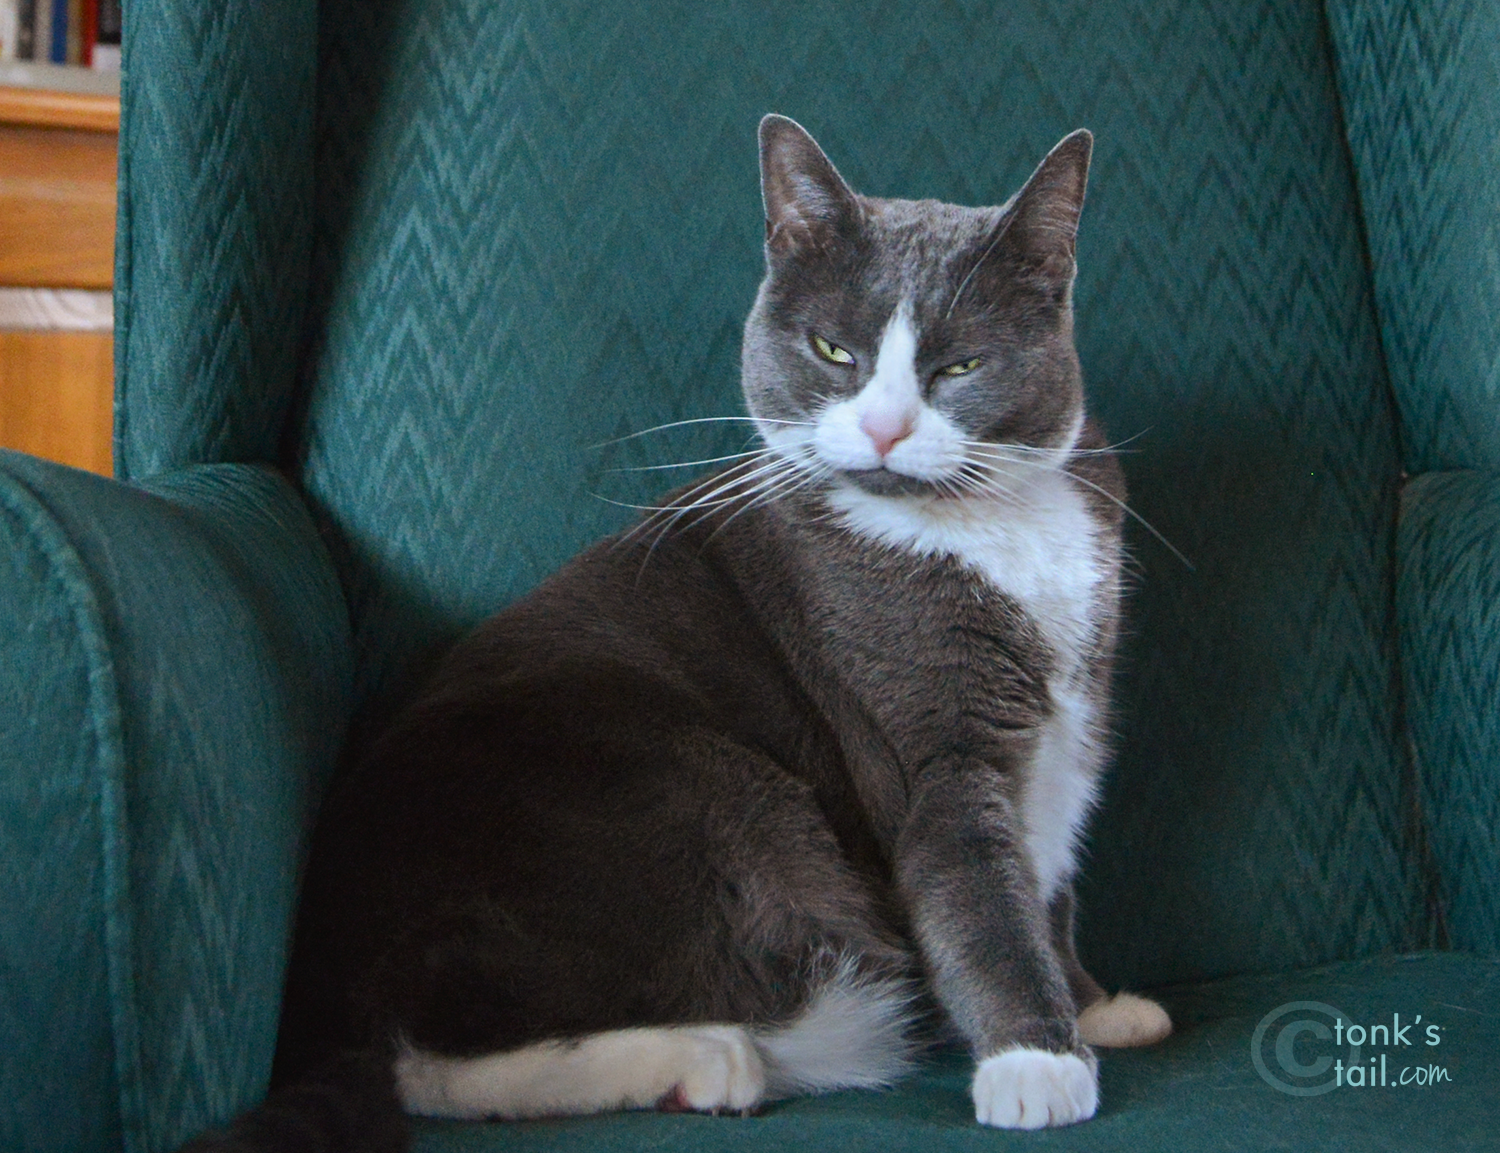 Allie looking scornful! #snobbycat #tudedocat #cathumor #catsonchairs #cats